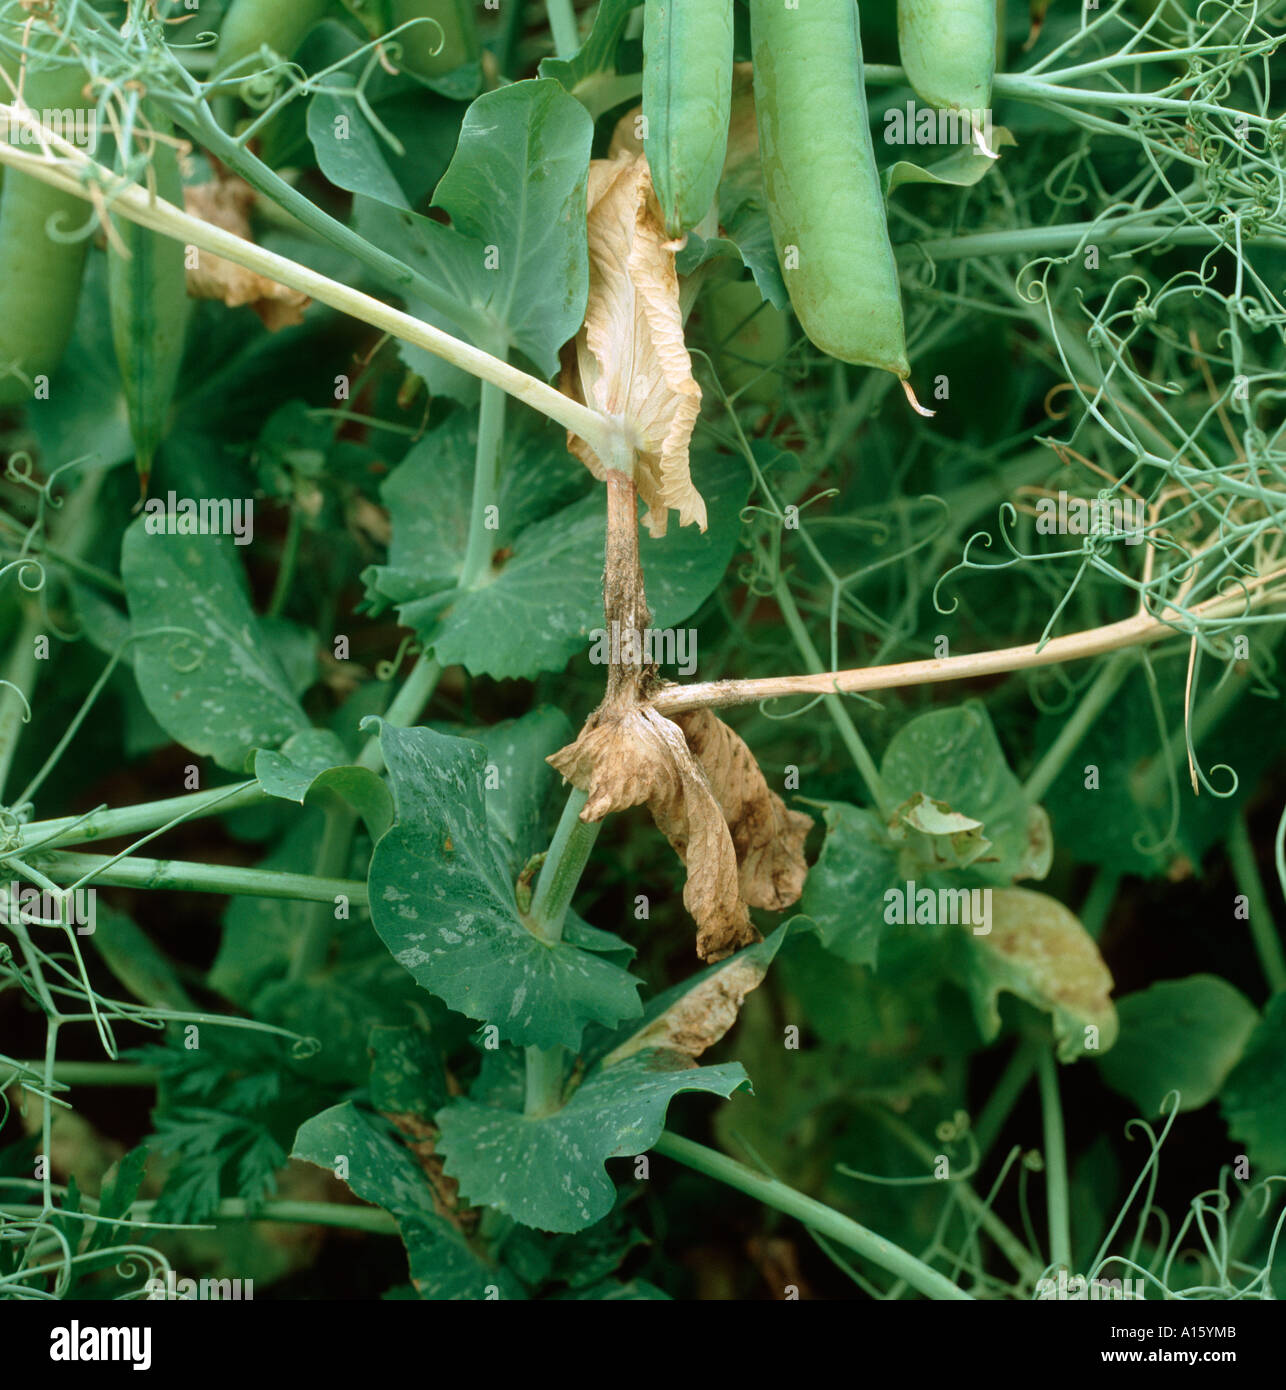 Guisante tallo y hoja axials infectado con moho gris Botrytis cinerea Foto de stock